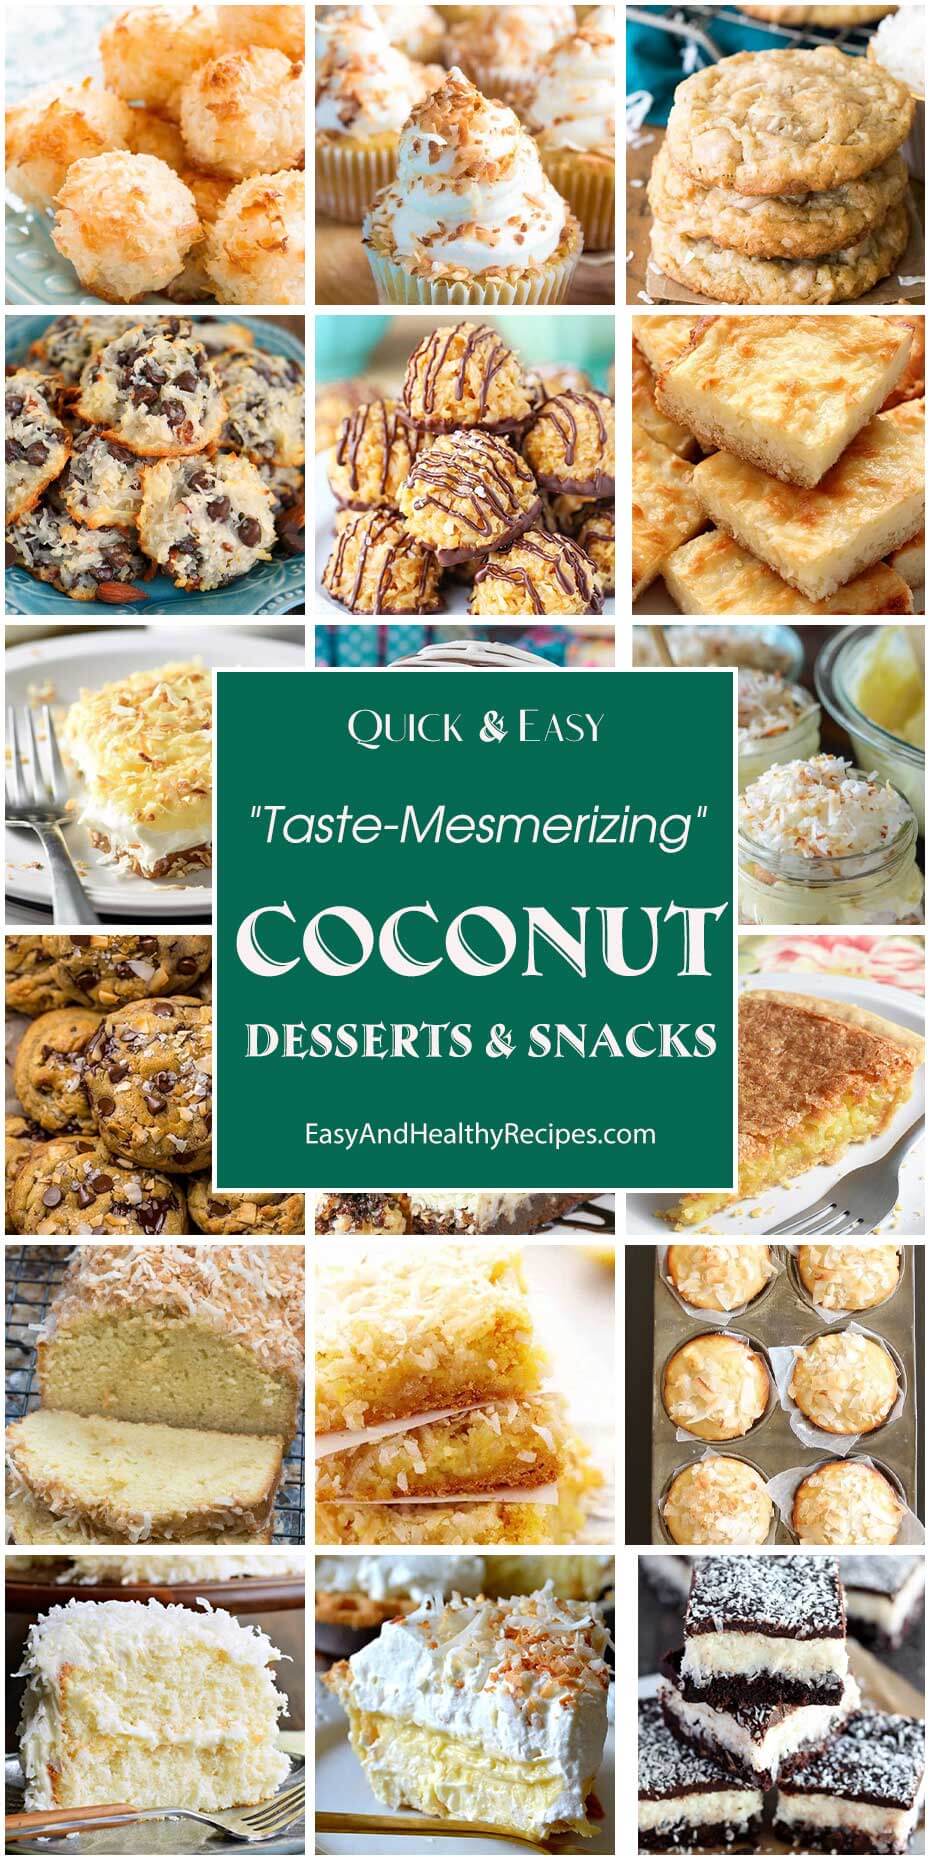 30 "Taste-Mesmerizing" Coconut Desserts and Snacks